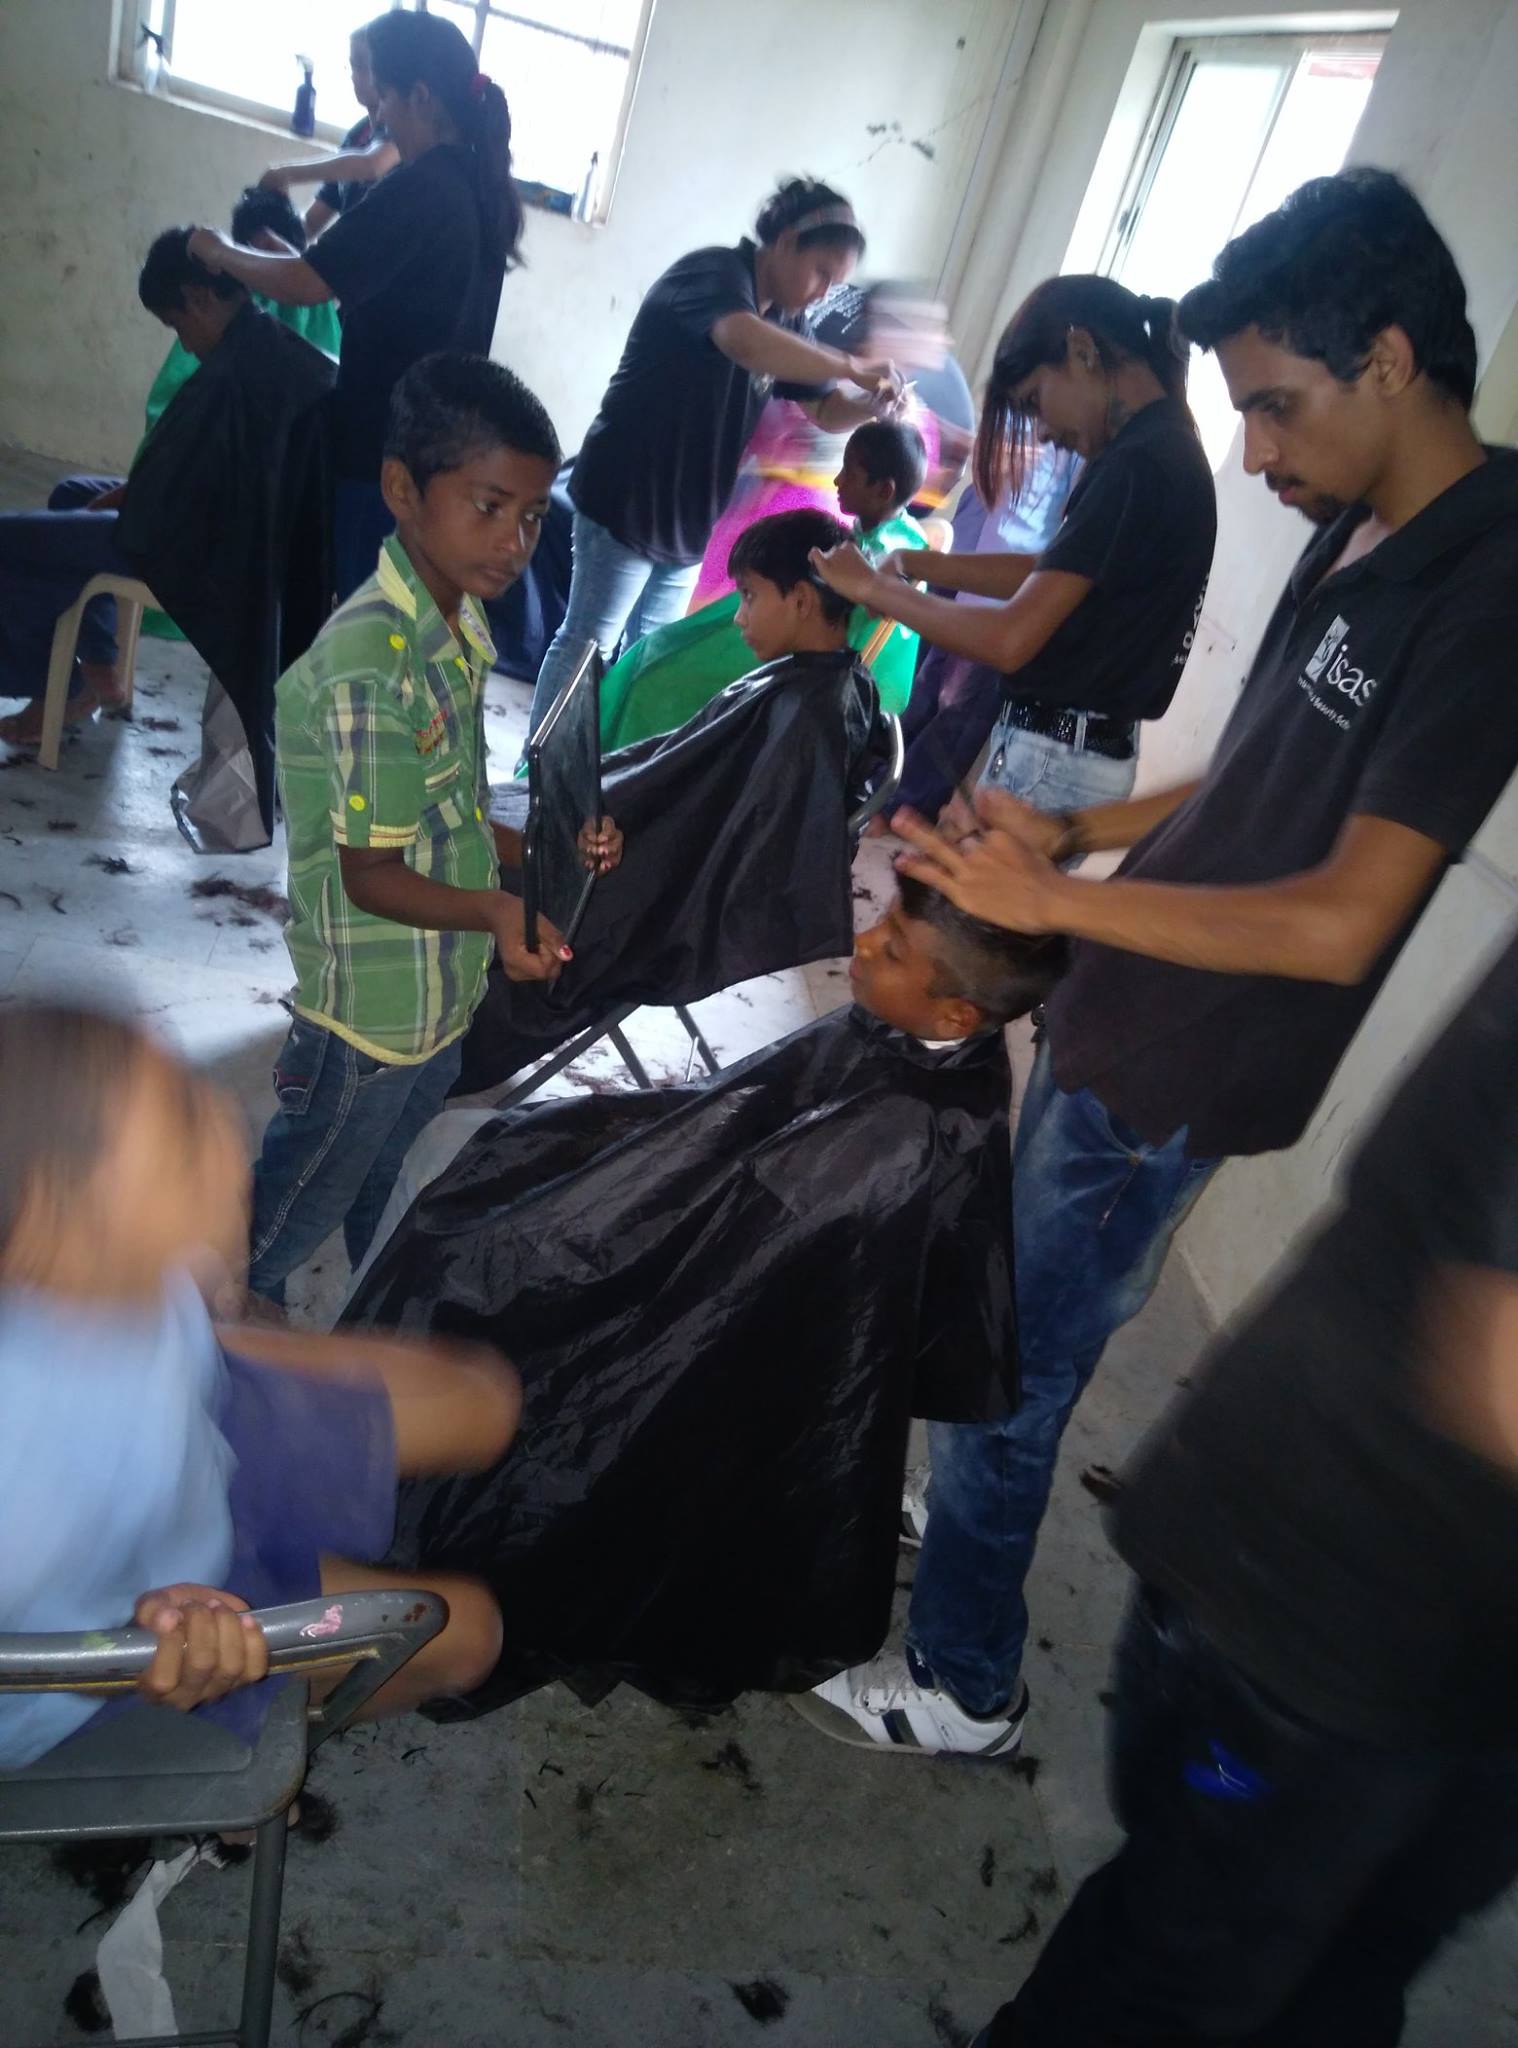 Free Haircuts to ASHRAM (ORPHANAGE) Kids